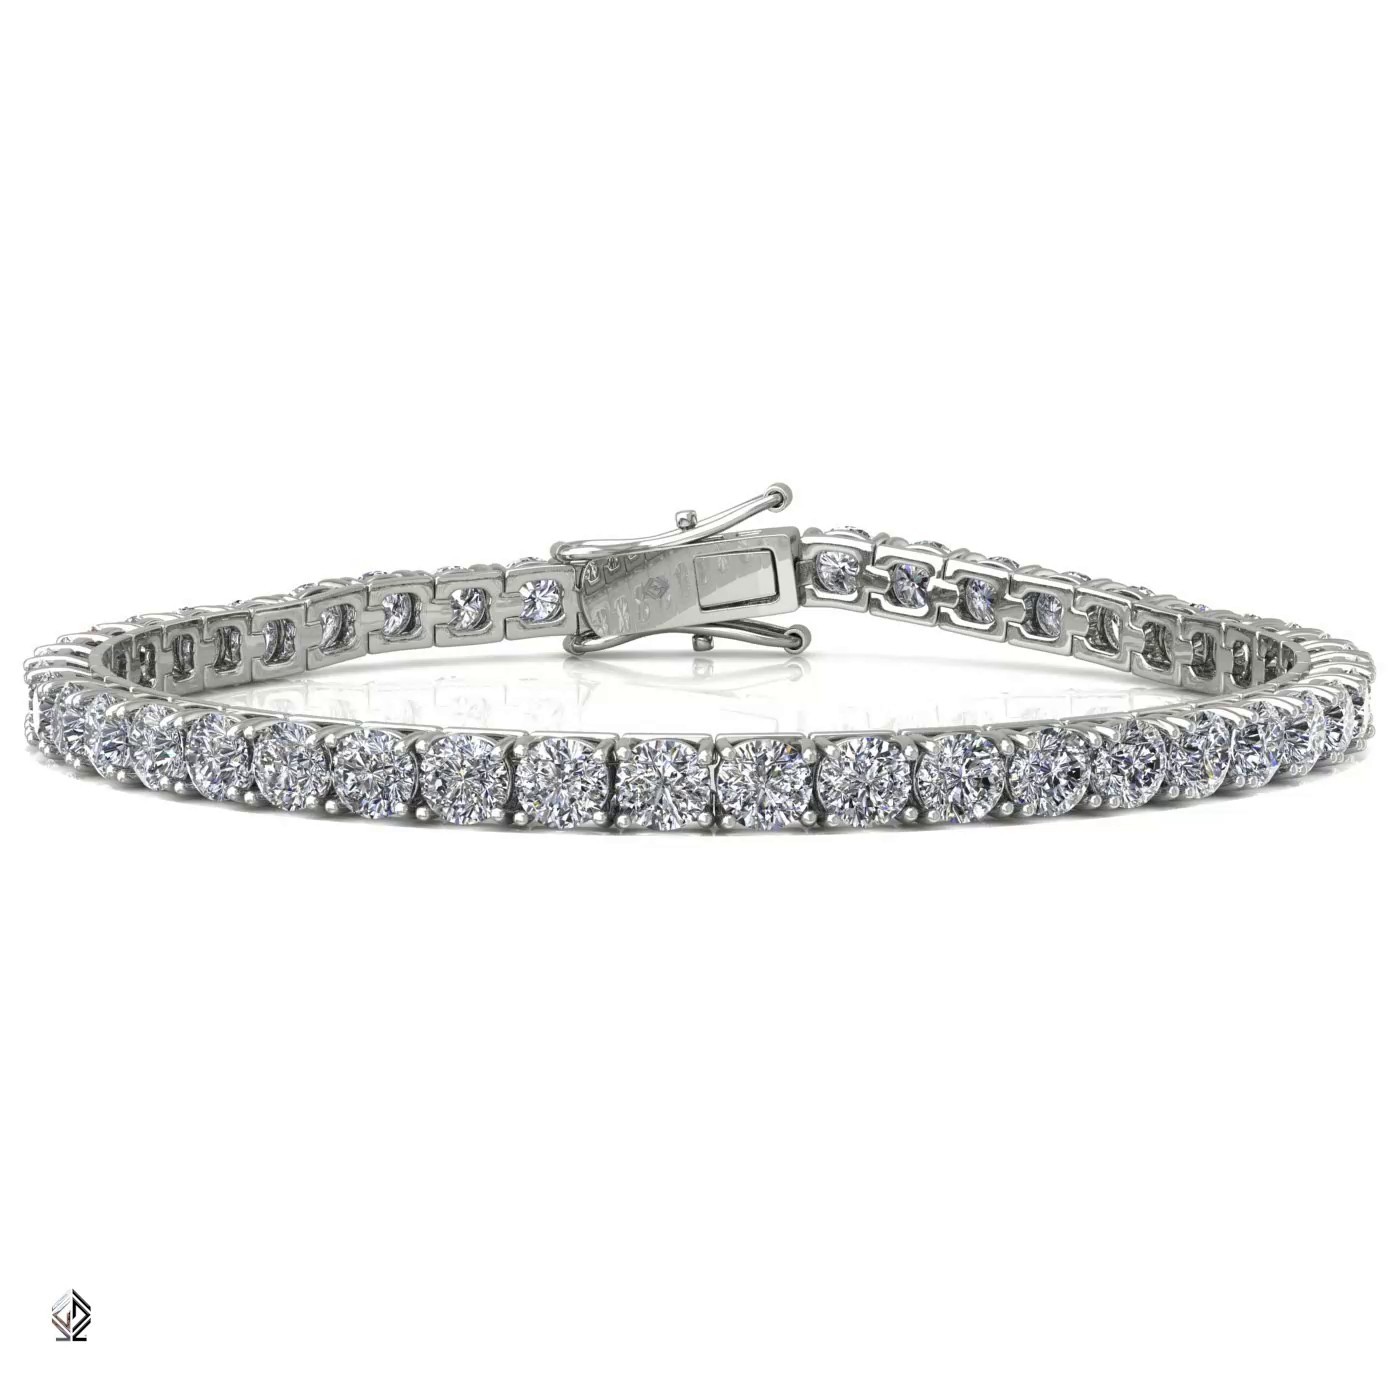 18k white gold 3.0mm 4 prong round shape diamond tennis bracelet in square setting Photos & images